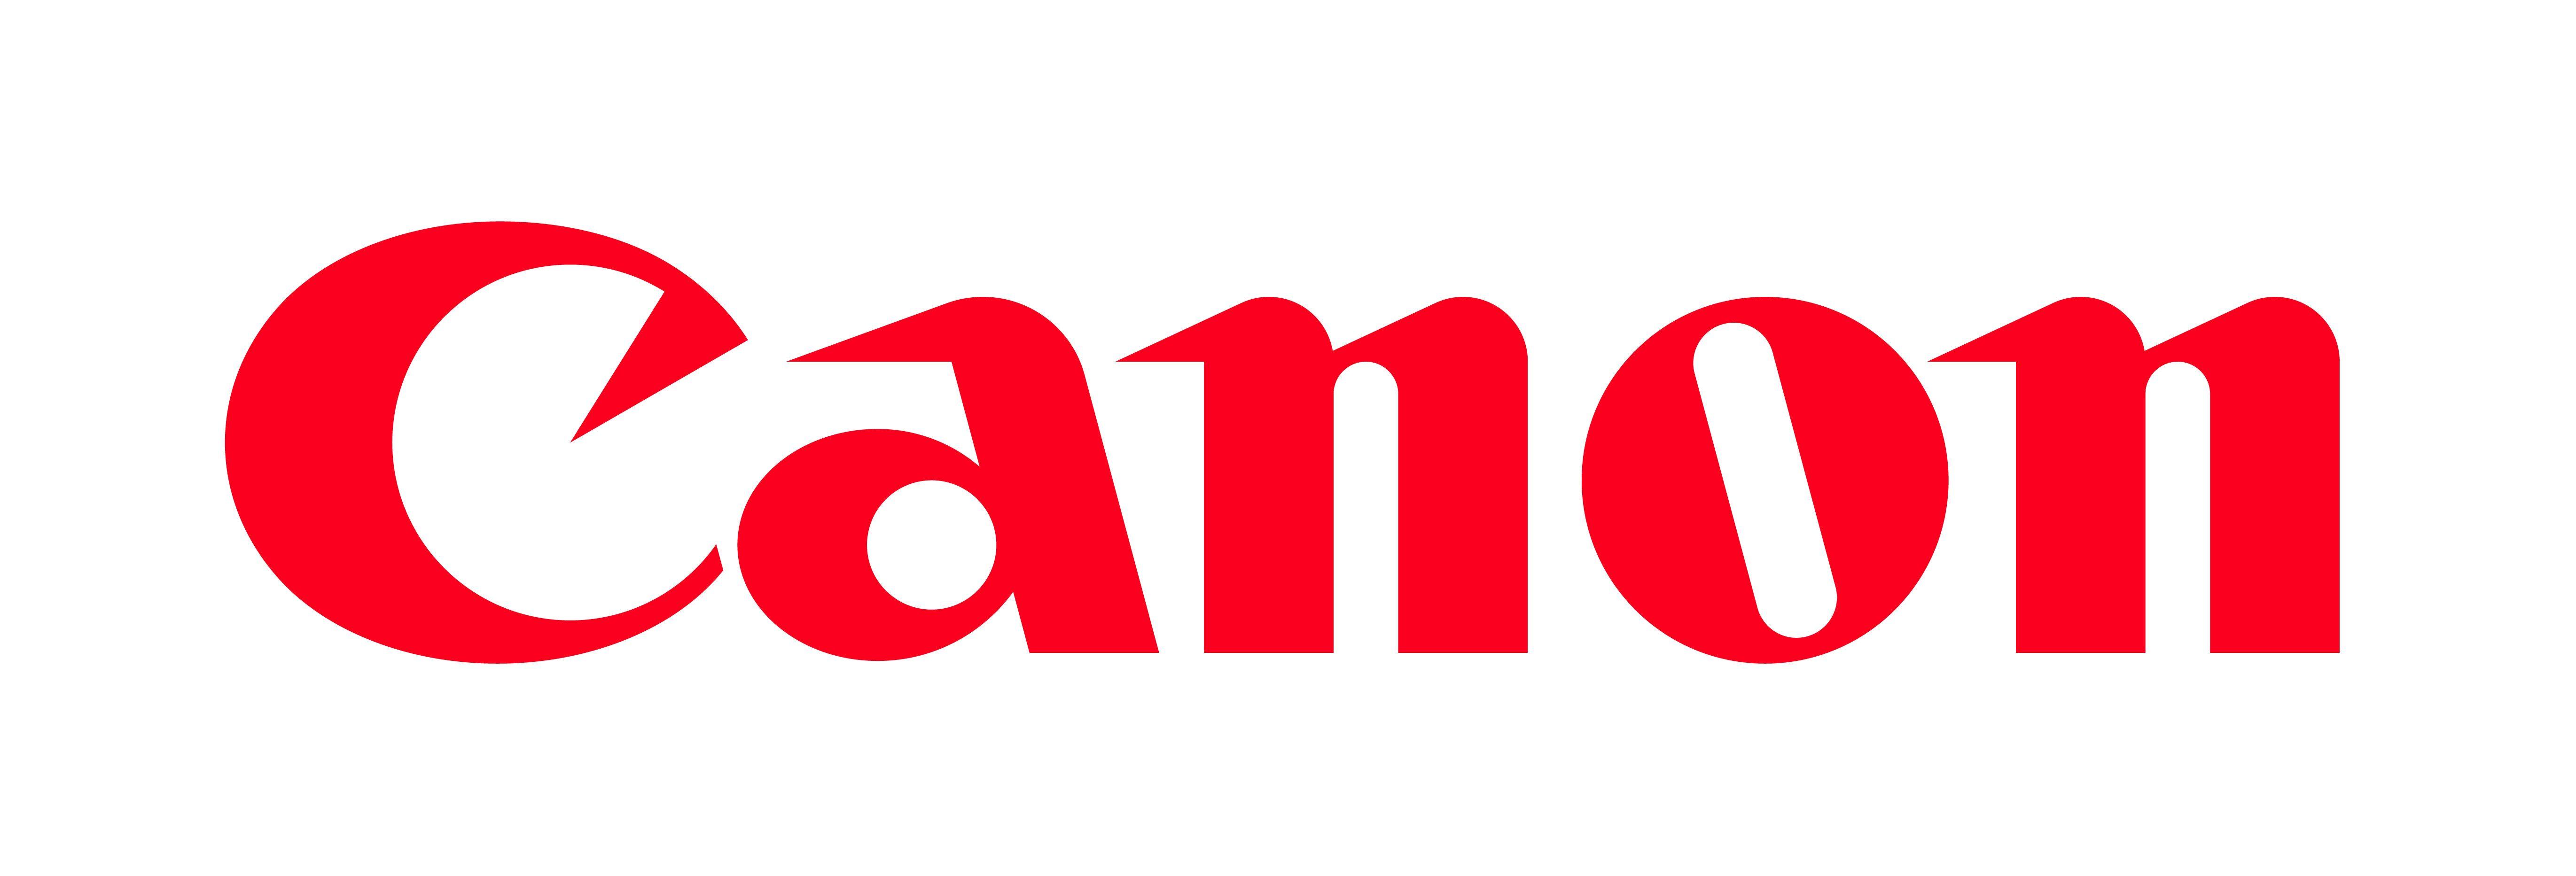 Canon Medical Logo - Canon Logo PNG Transparent Canon Logo.PNG Images. | PlusPNG